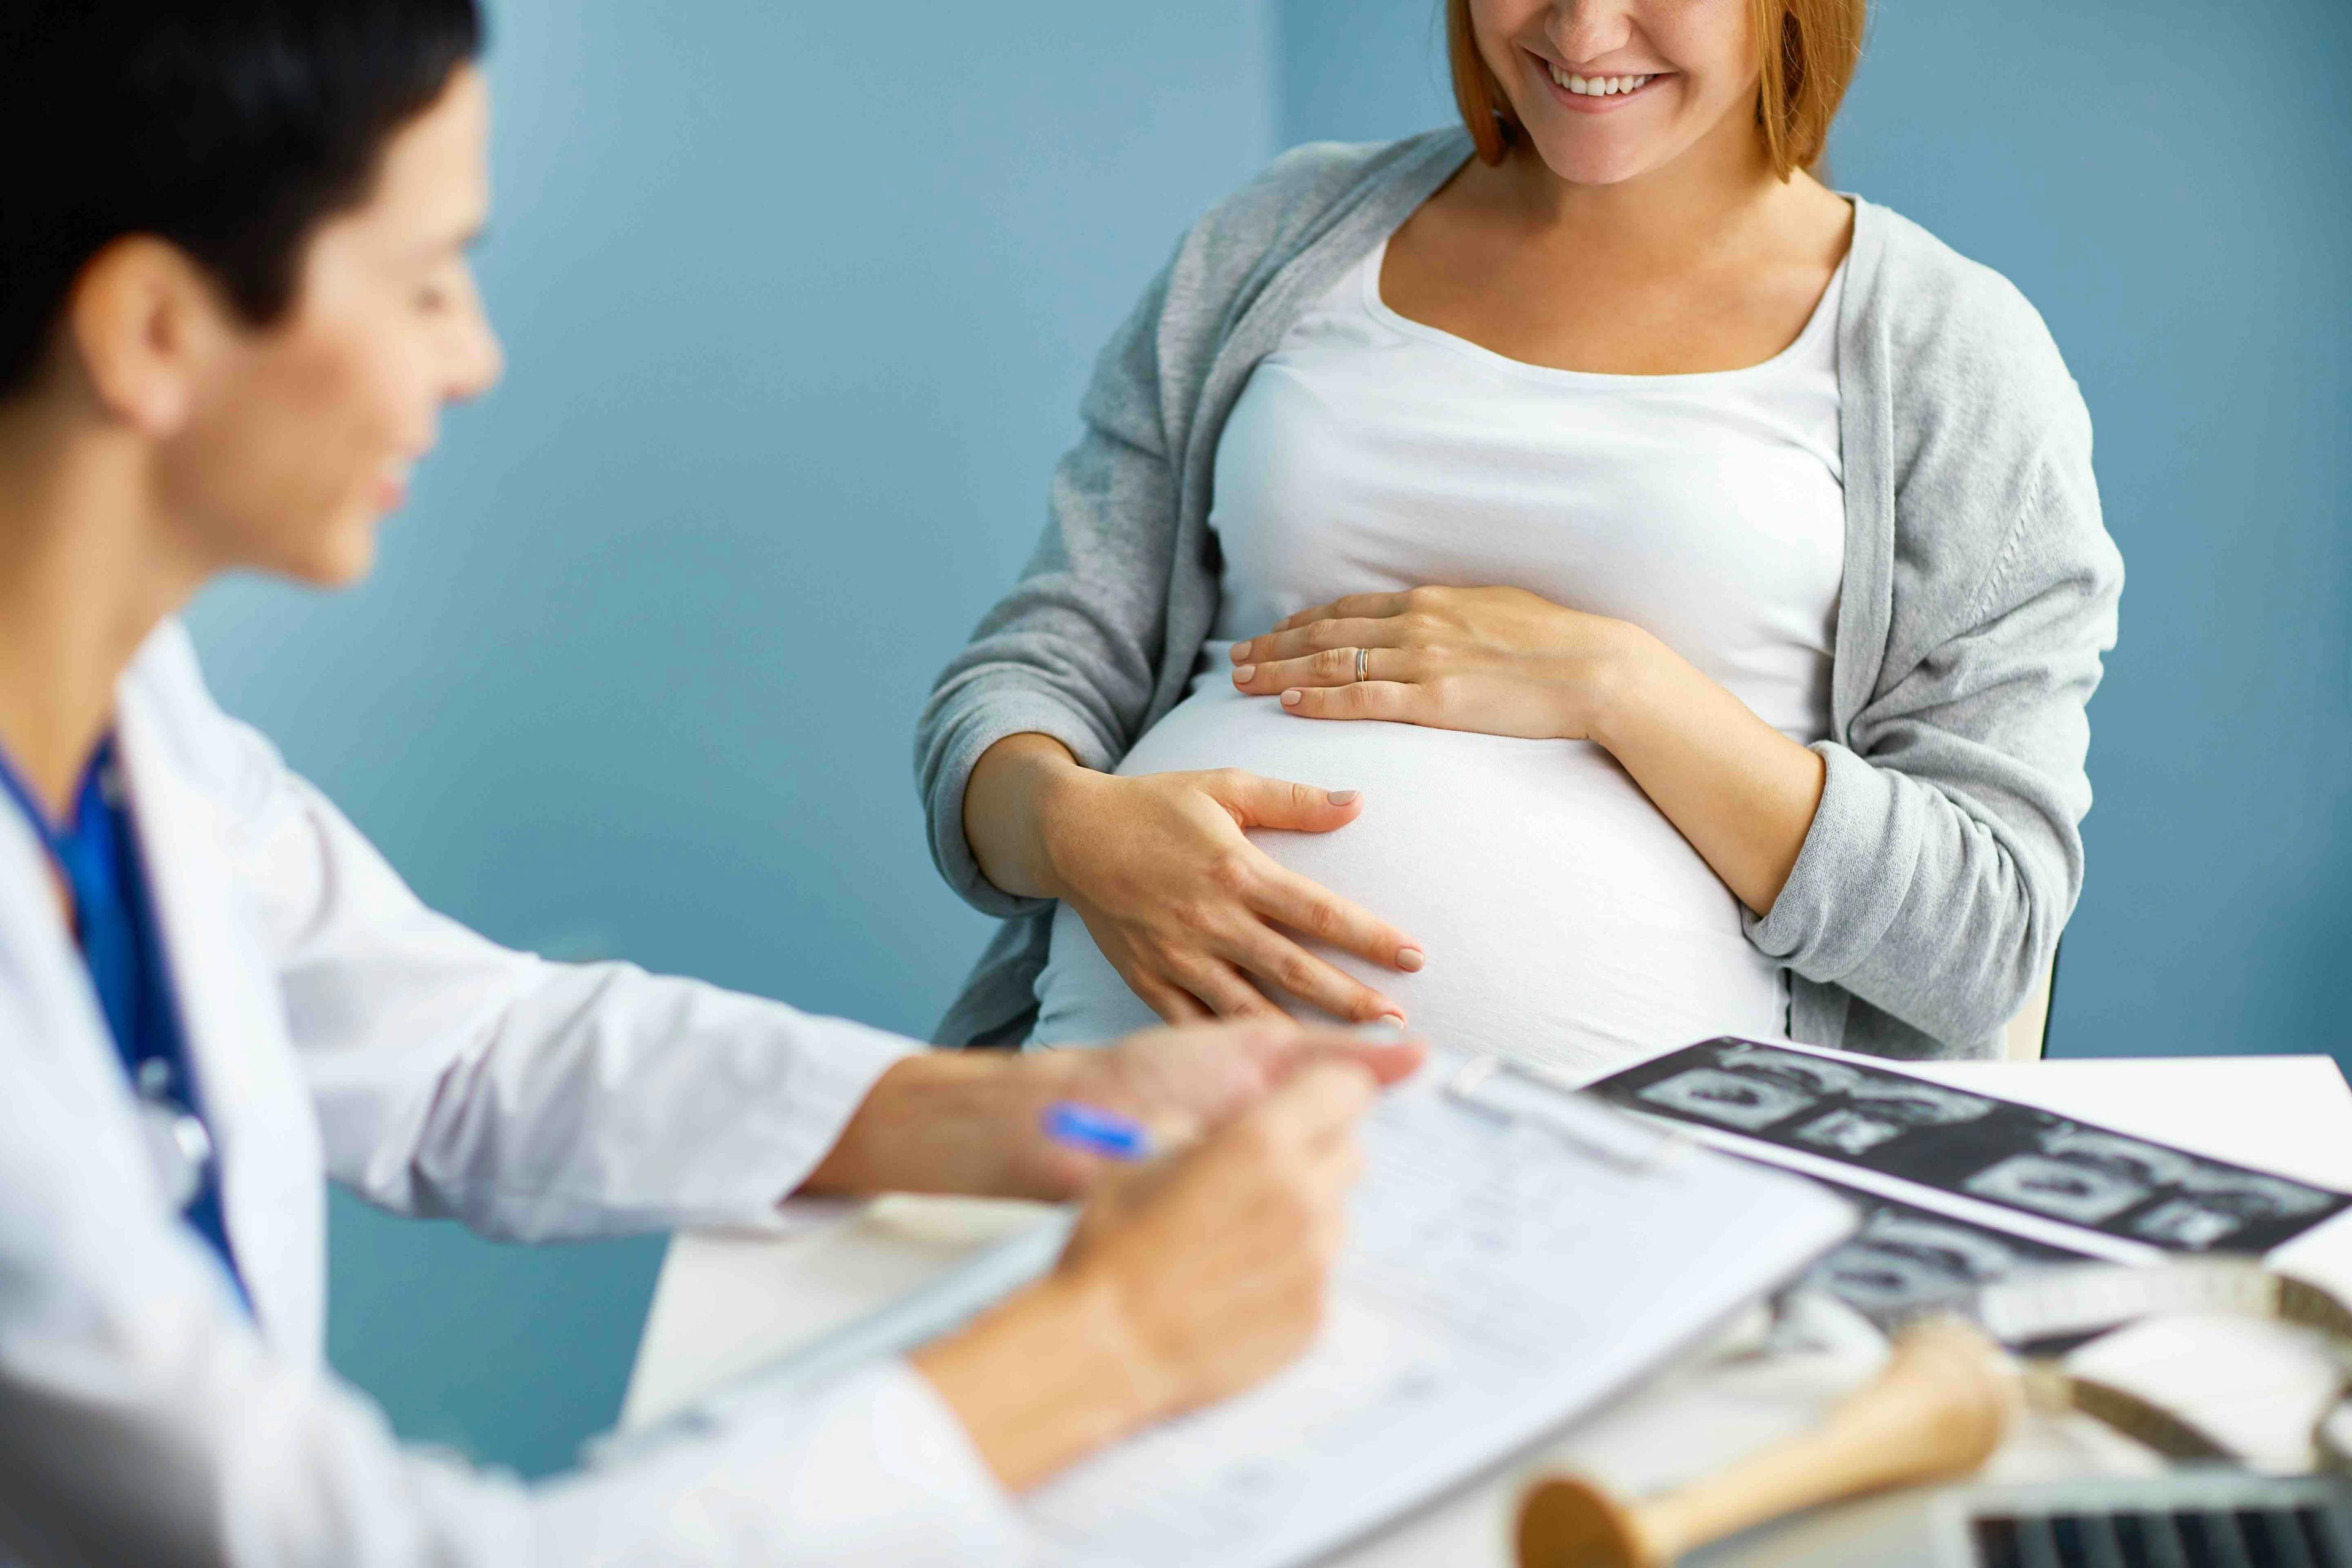 Doctor visit during pregnancy | Image Credit: © pressmaster - stock.adobe.com